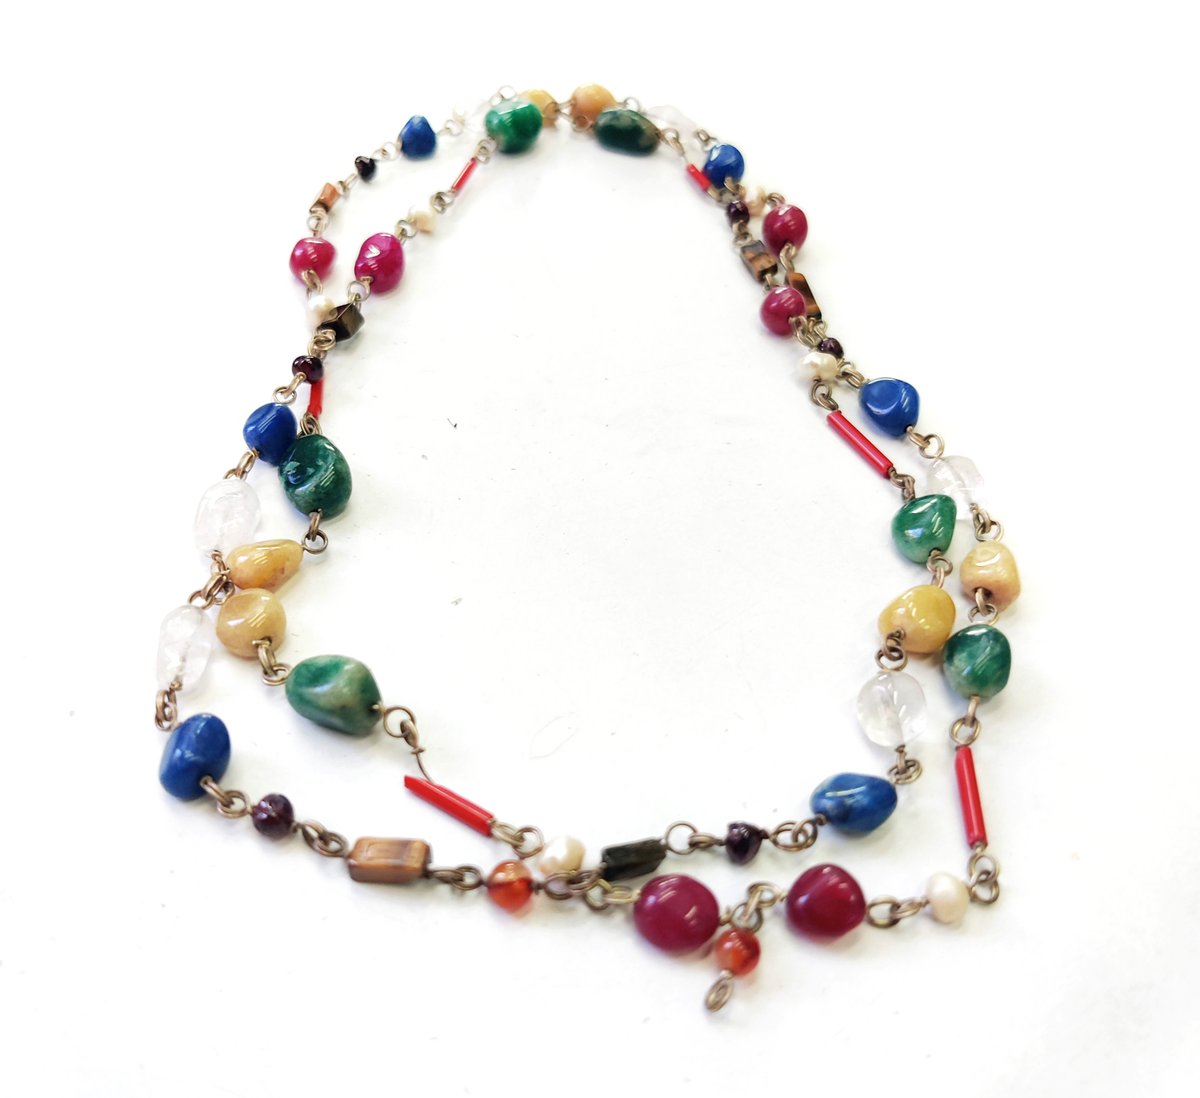 ebay.com/itm/1446848484…
🙏
#navratnamala #sacred #Neckbead #beadsjewelry #navratnajewelry #beads #rudrakshamala #krishna #shiva #hindu #jewellery #beadshop #prayerbeads